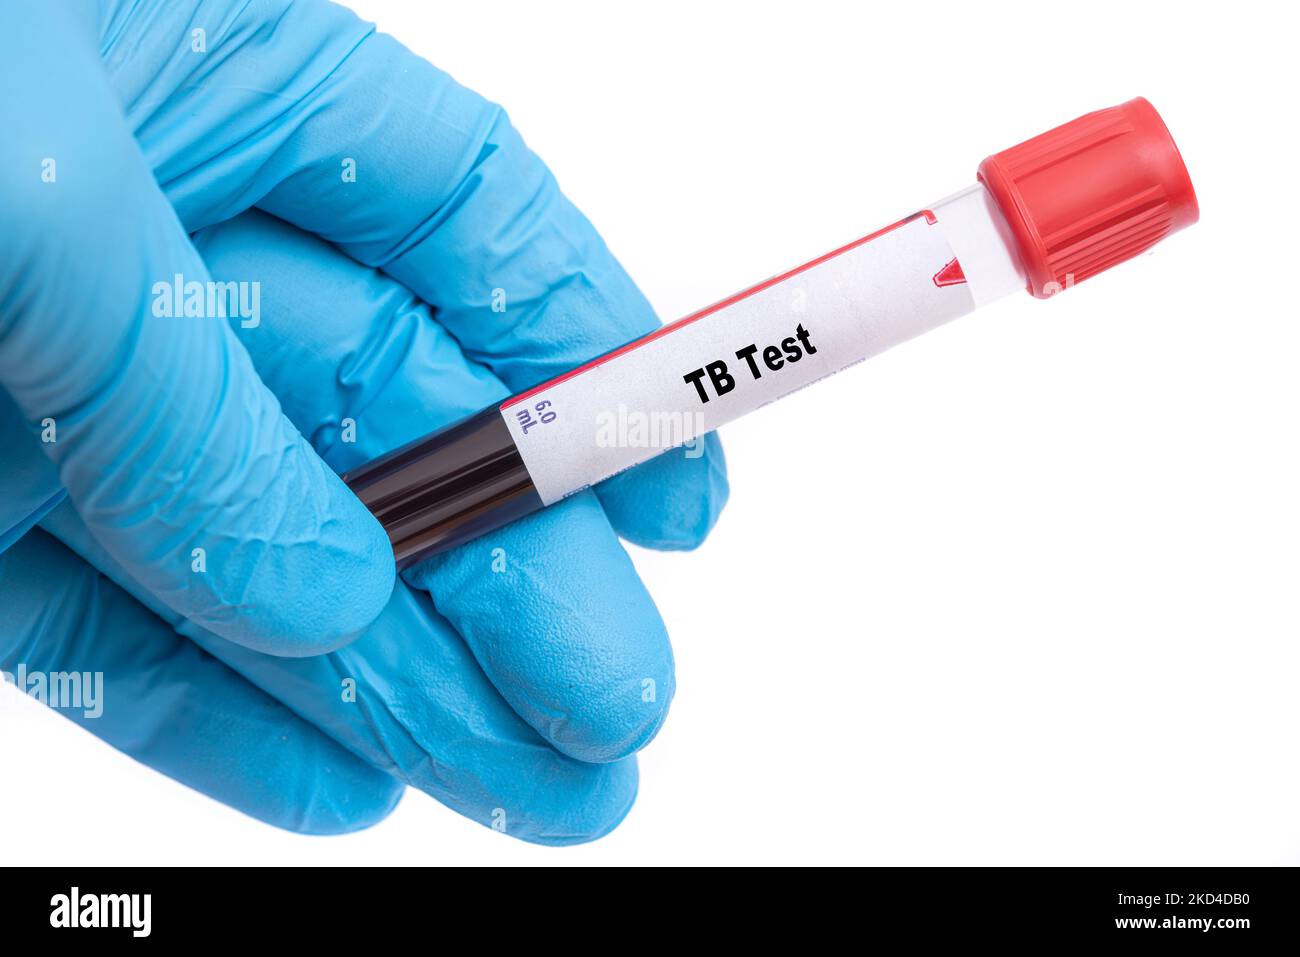 Tuberculosis test, conceptual image Stock Photo